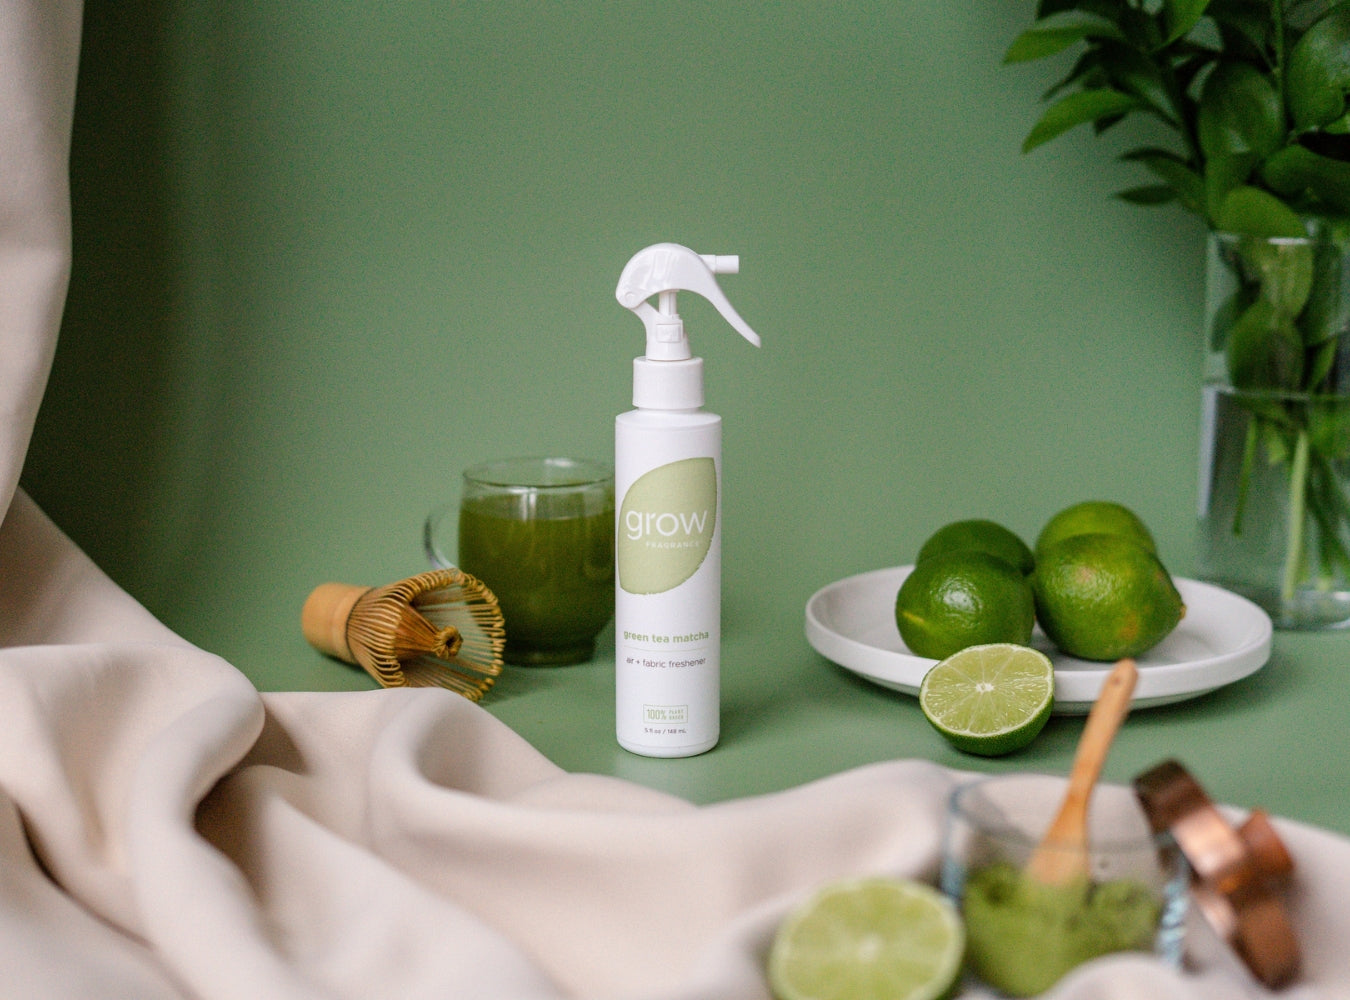 Green Tea Matcha Air + Fabric Spray (featured)